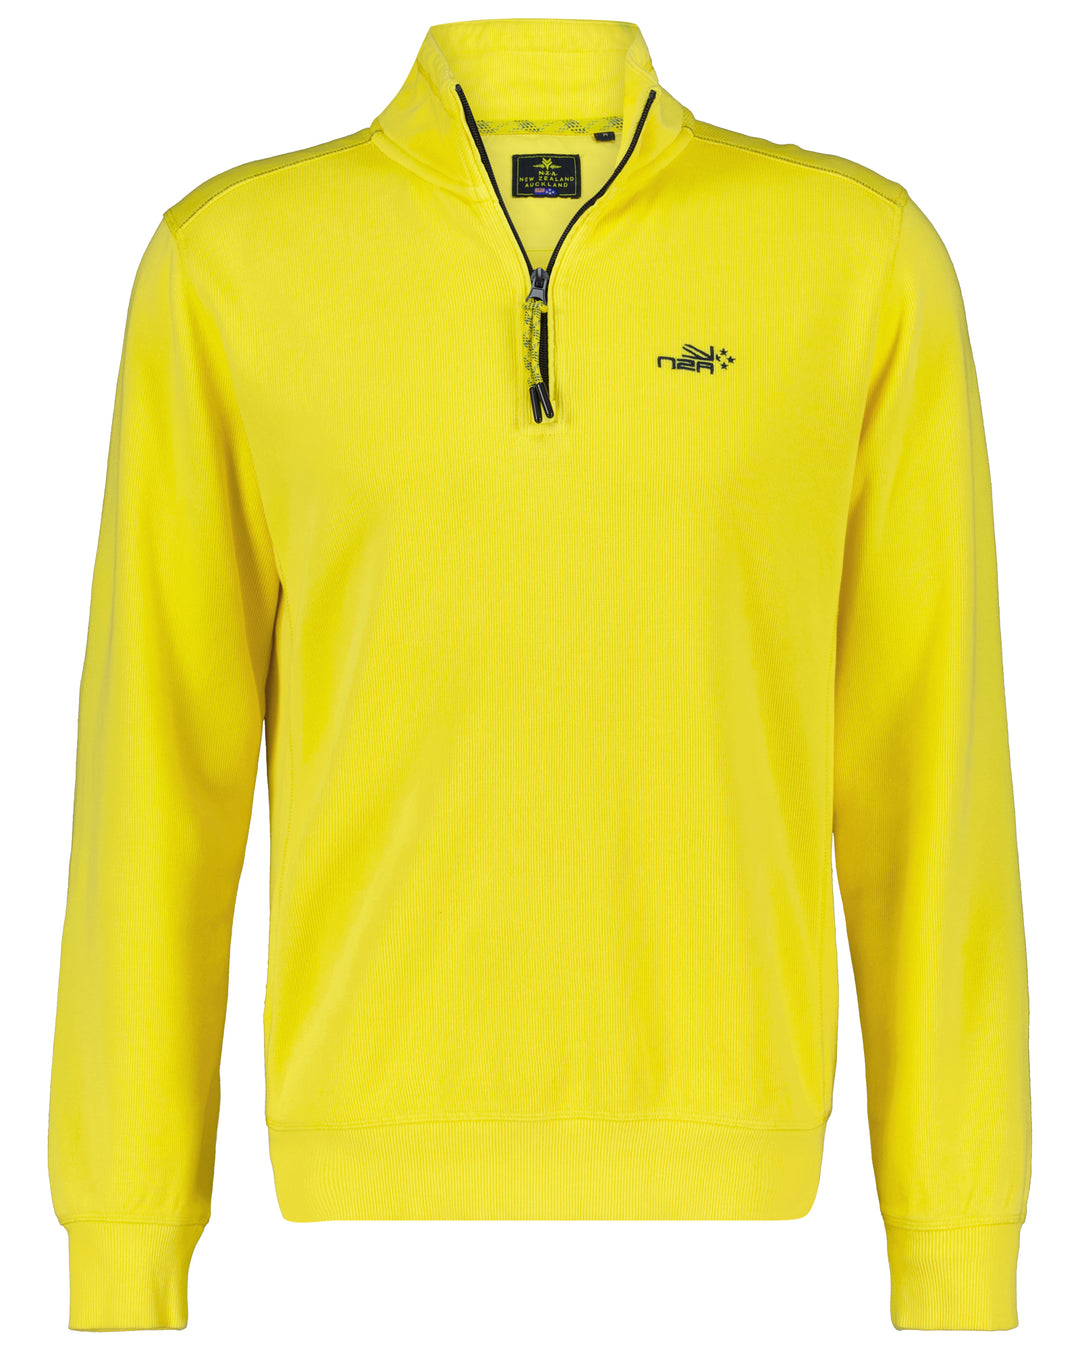 NZA - Heren Sweater - Lyes - 23BN306 - 1203 Country Yellow